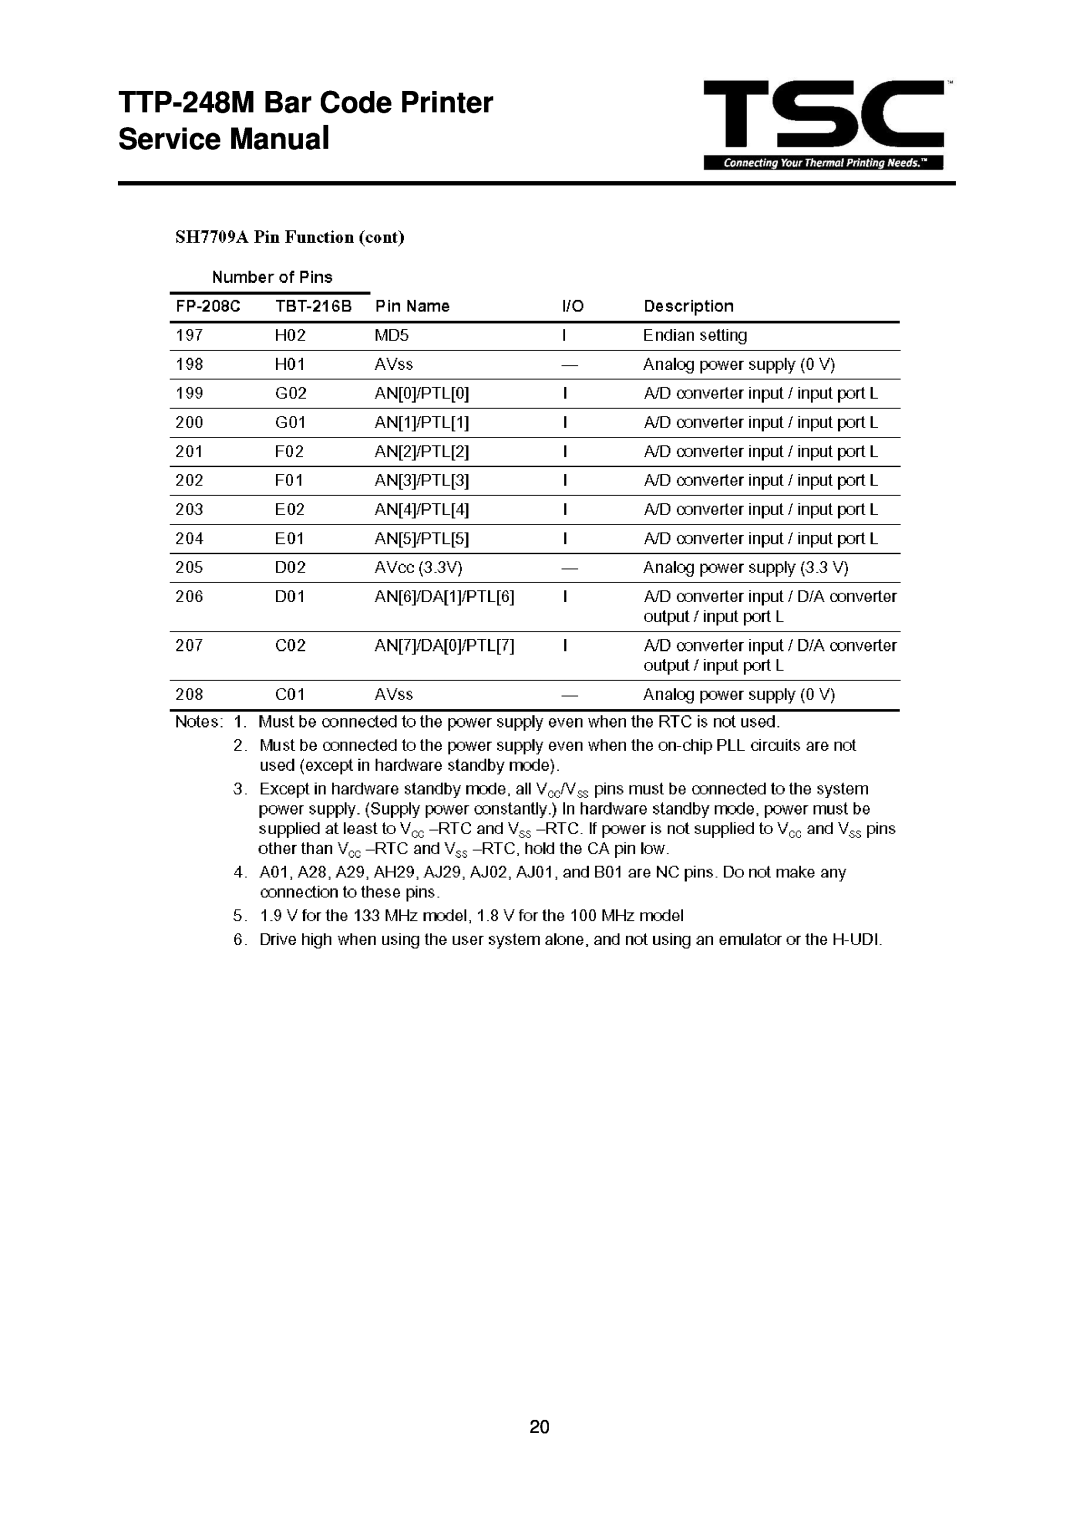 The Speaker Company TTP 248M service manual TTP-248M Bar Code Printer Service Manual 